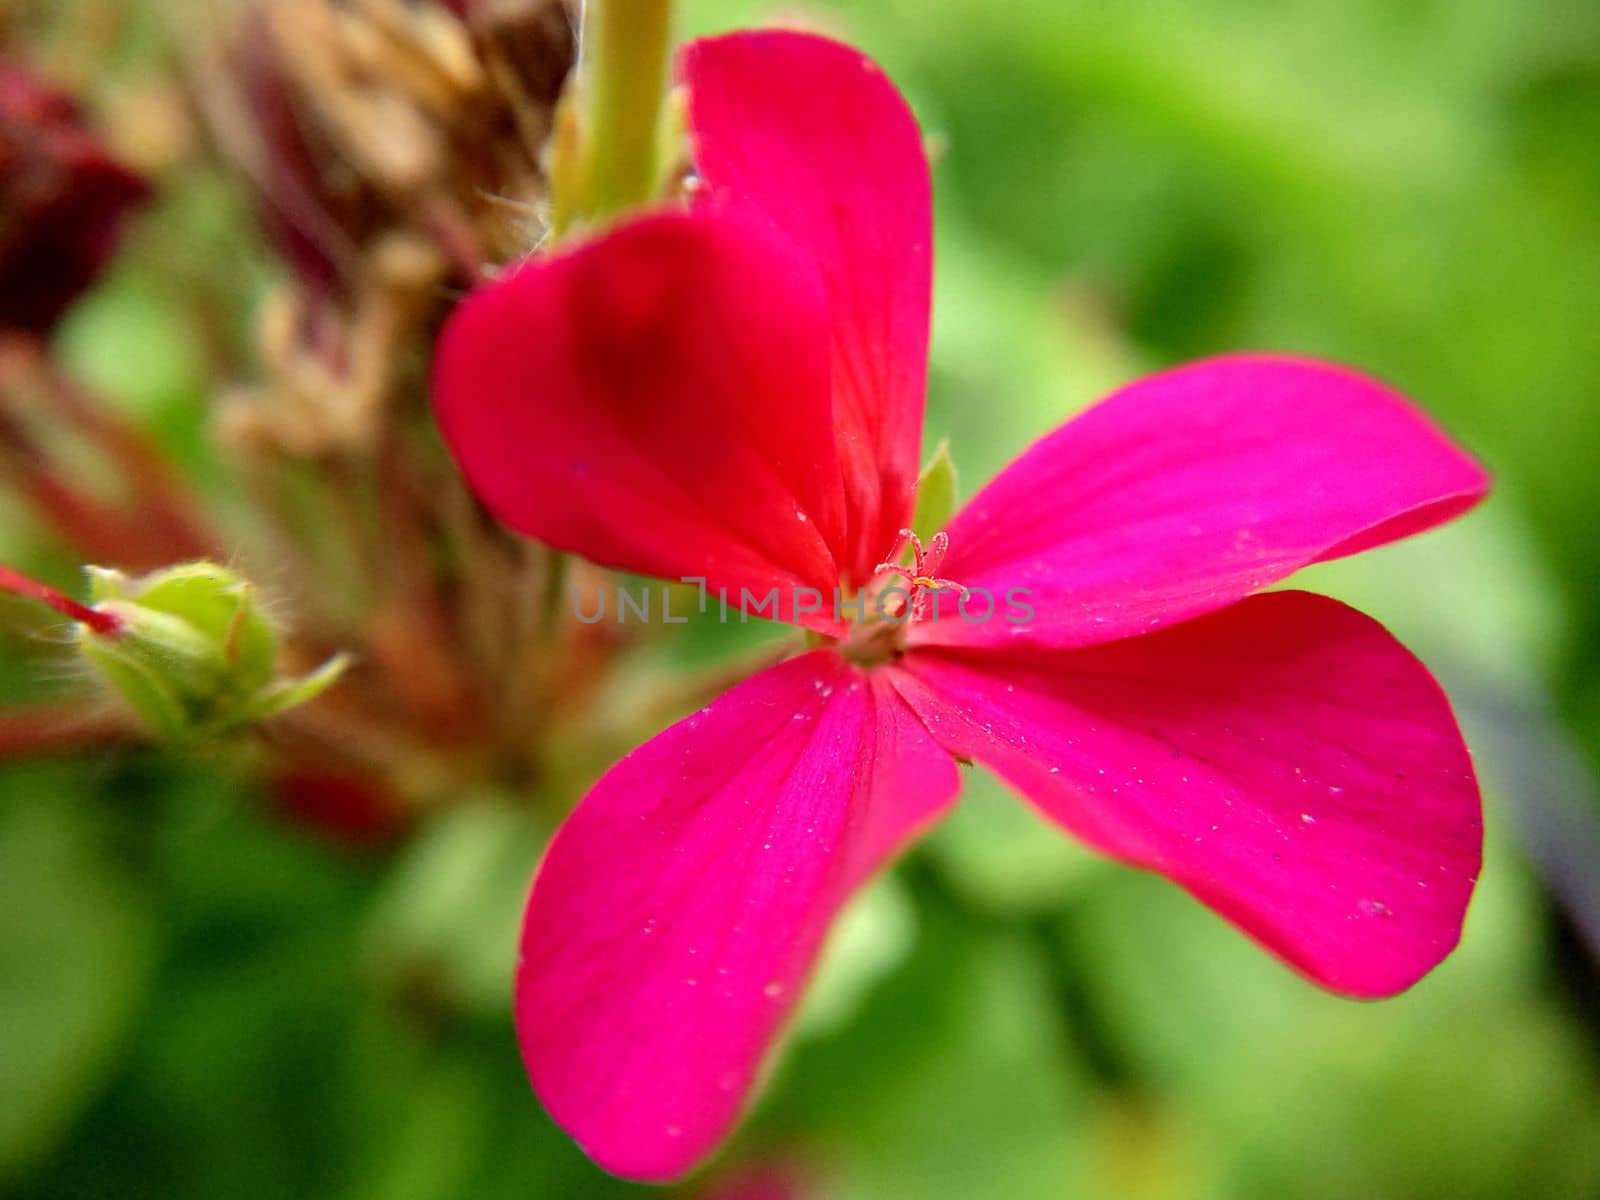 A four-leaf bright crimson flower on a grass blurred background by Mastak80